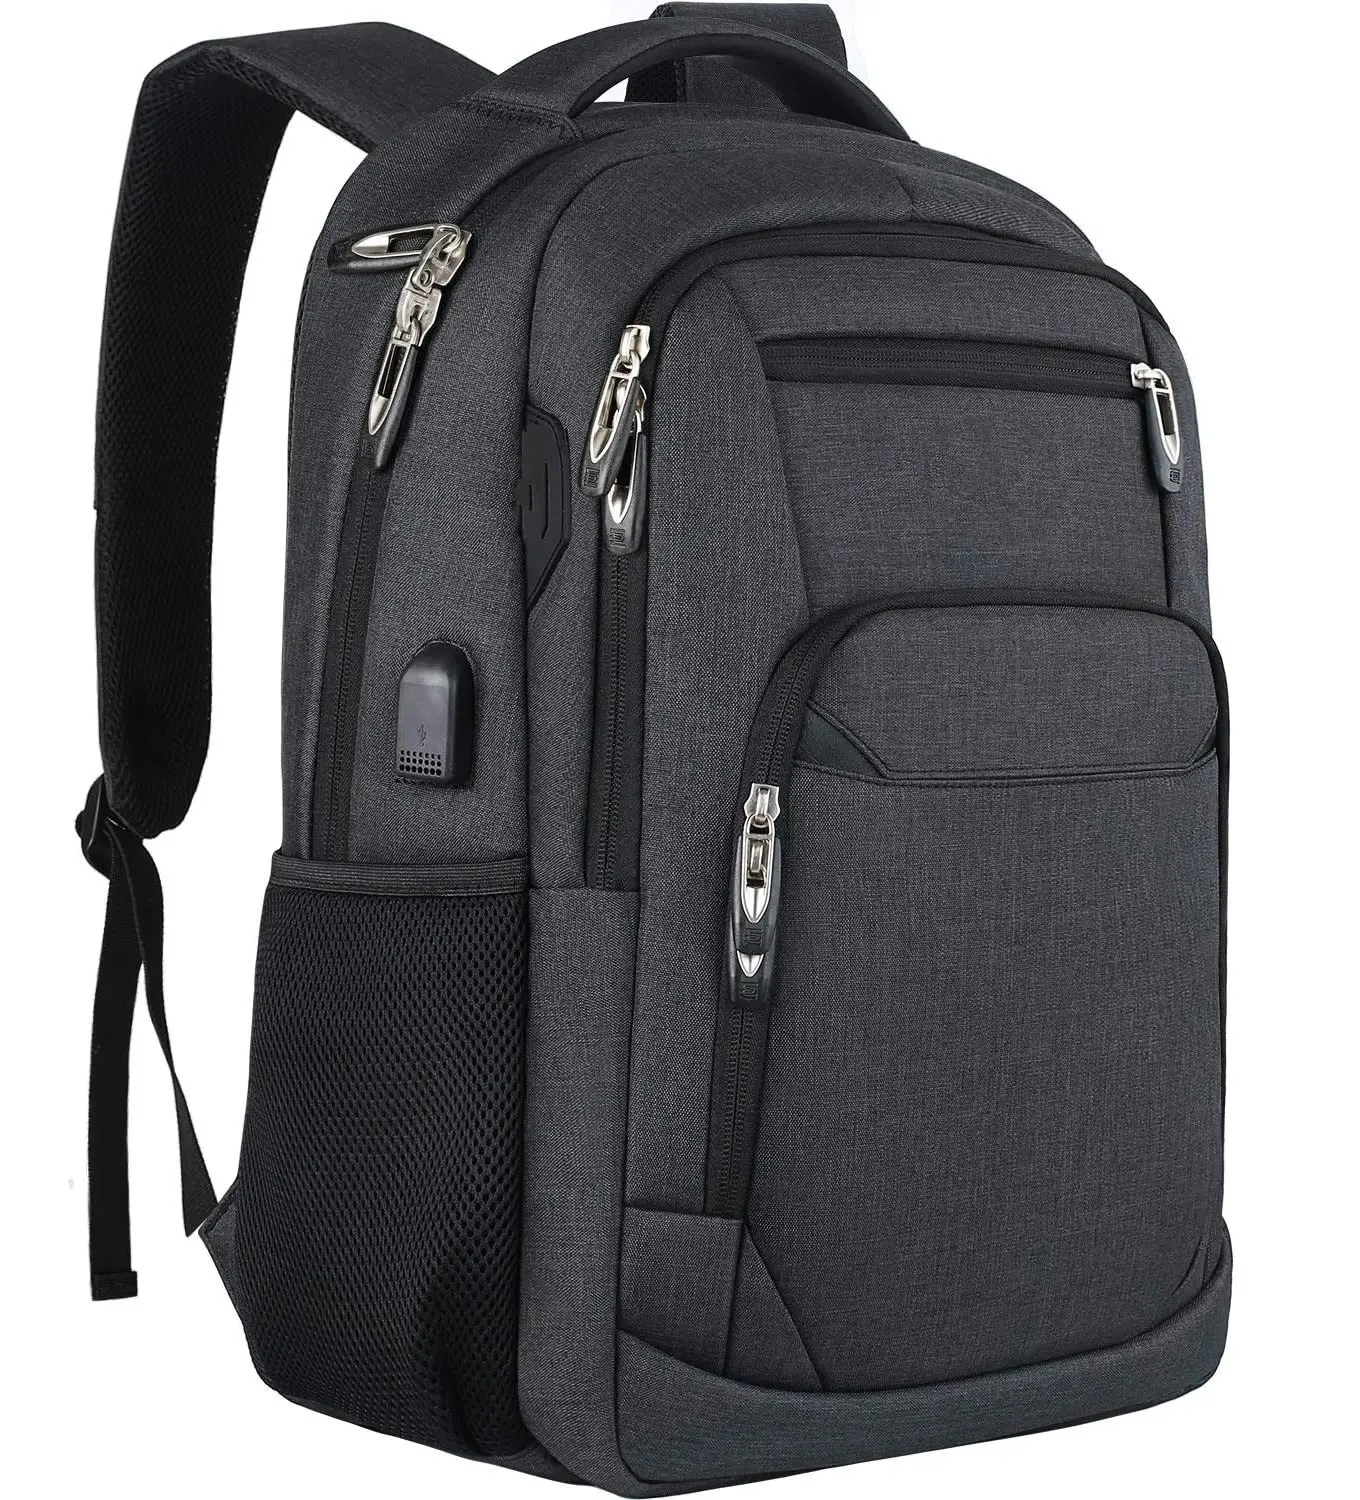 FREE SAMPLE Laptop Backpack bag Business Travel Anti Theft Slim Durable Laptops Backpack Water Resistant School Computer Bag